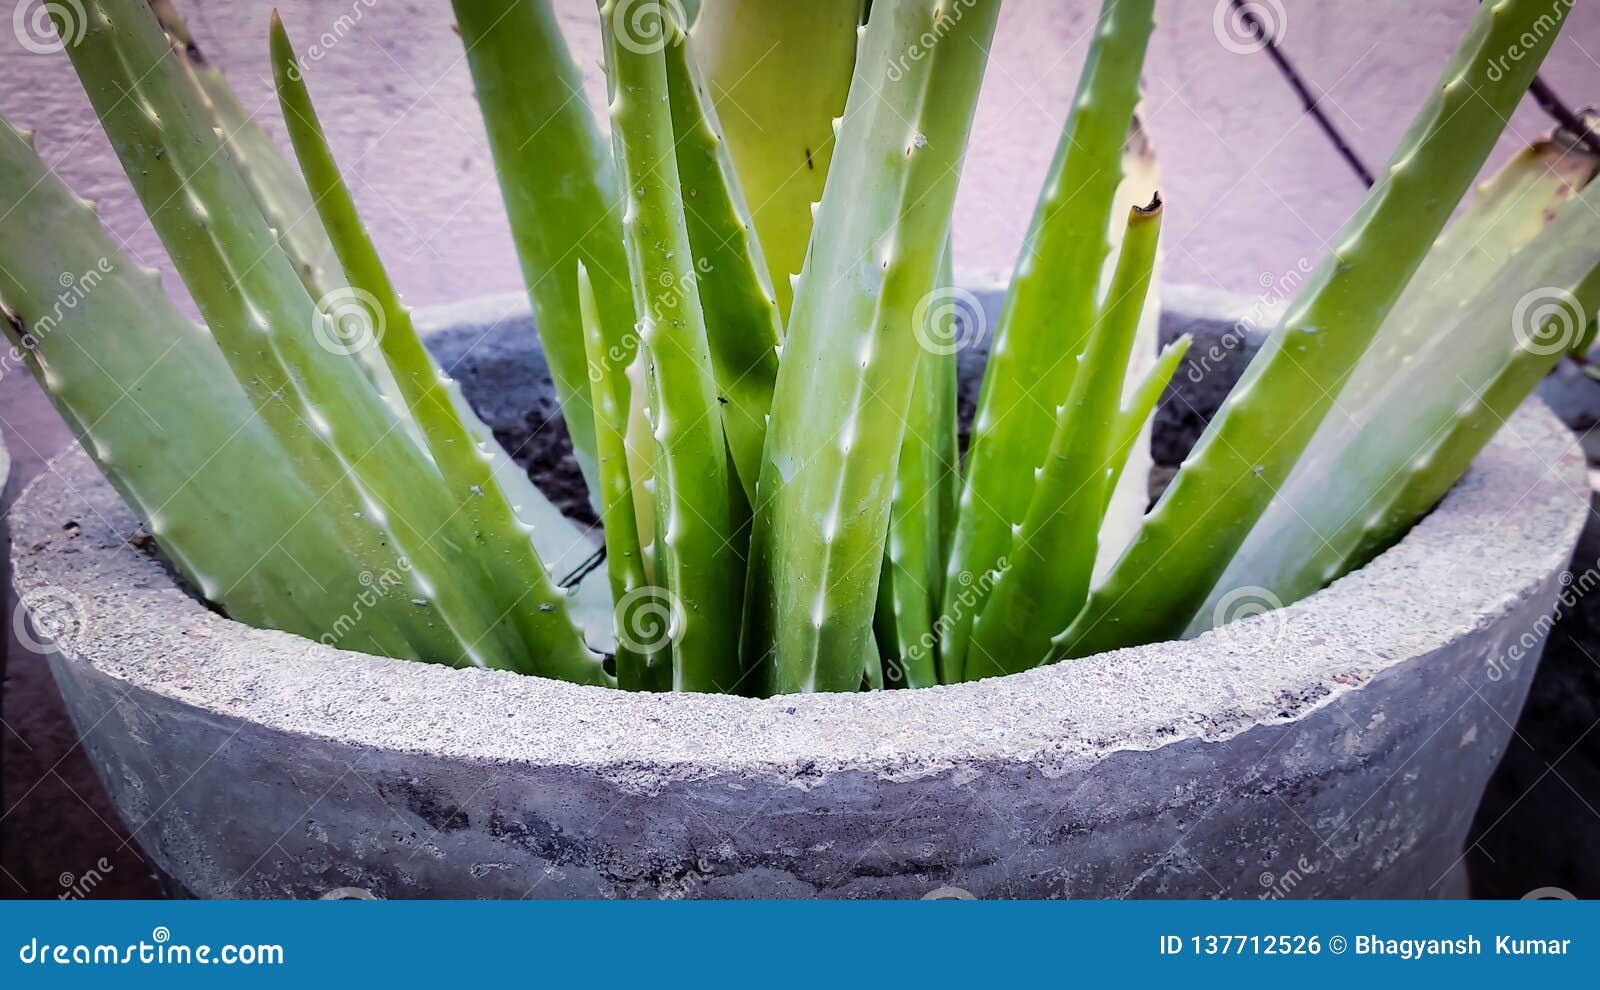 A Growing Aloe Vera Plant Stock Photo Image Of Health 137712526